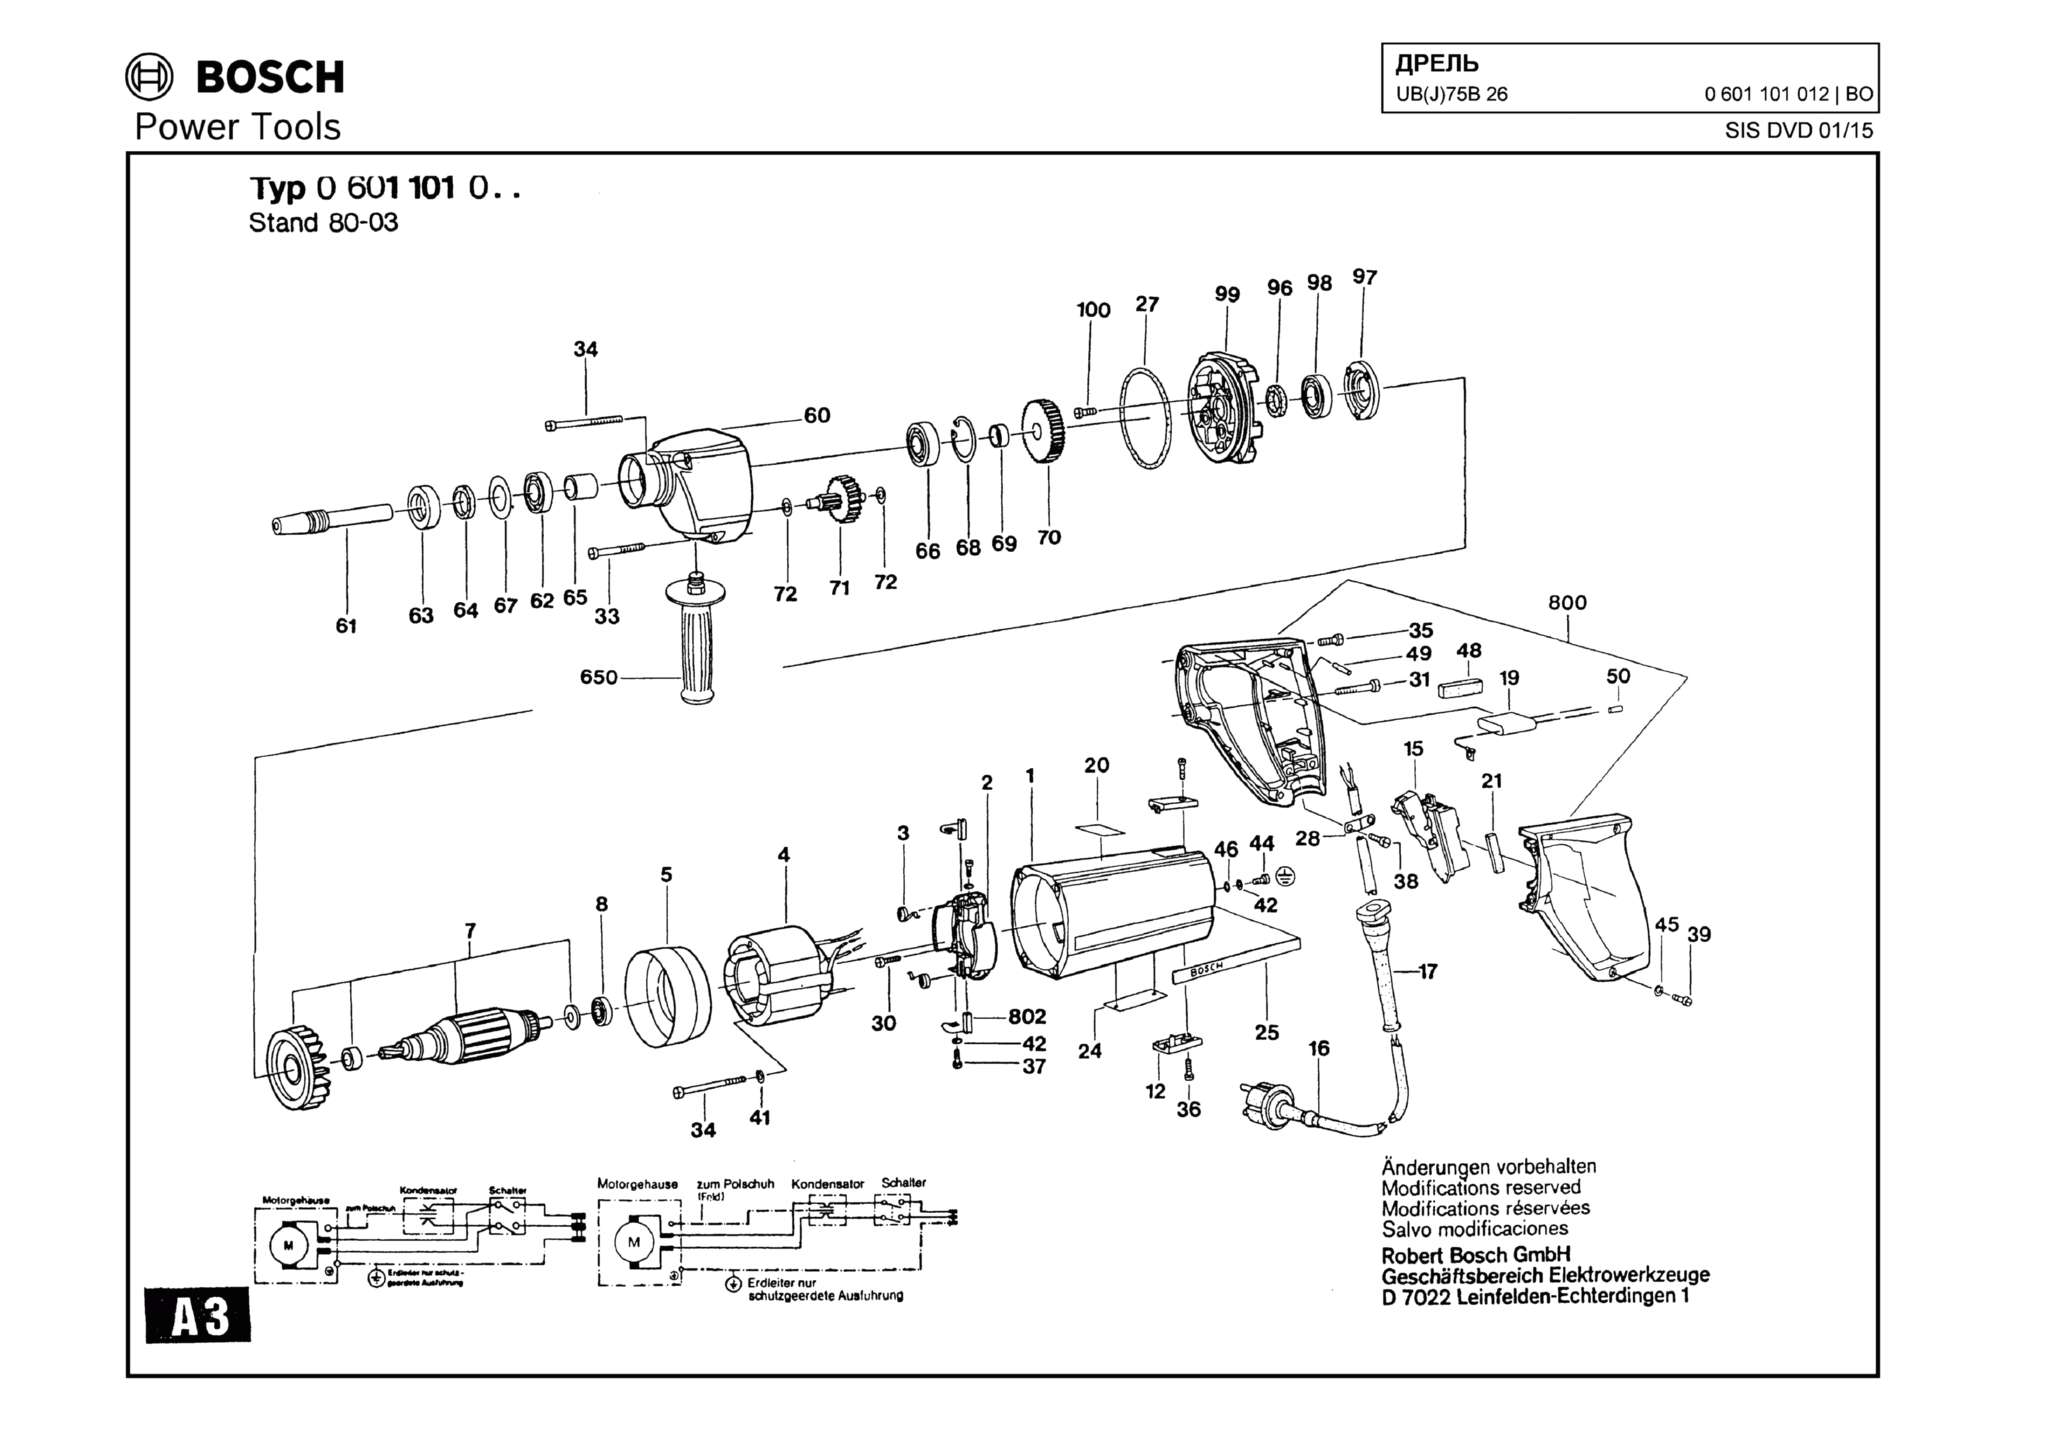 Запчасти, схема и деталировка Bosch UB(J)75B 26 (ТИП 0601101012)